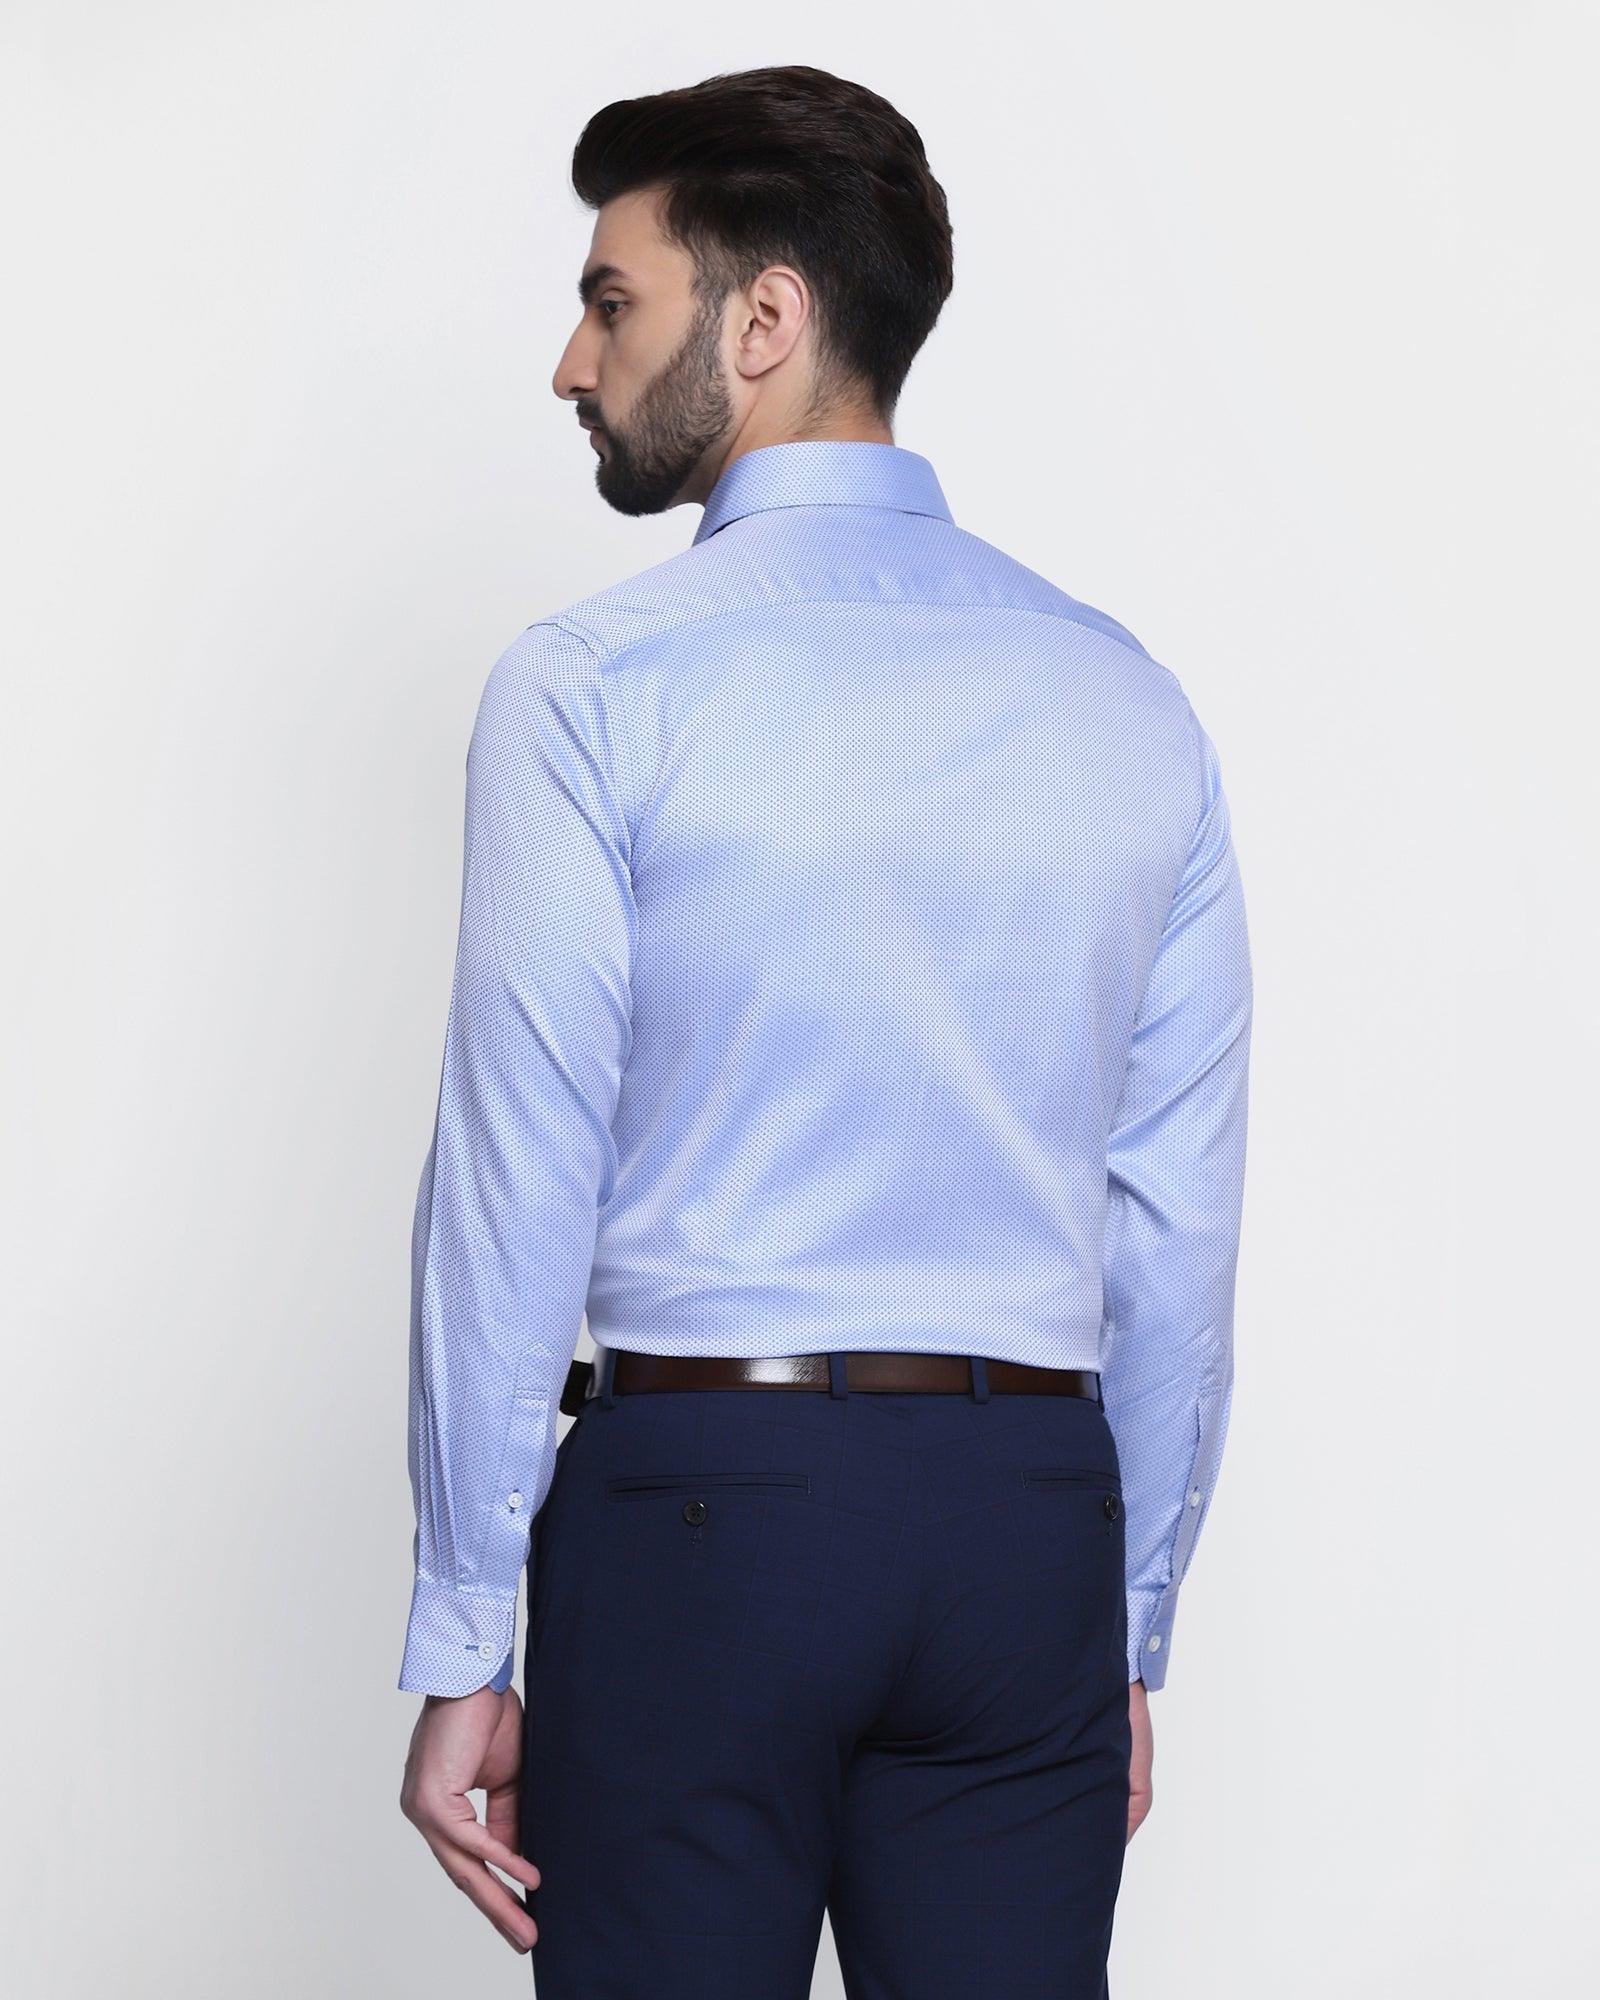 Formal Blue Textured Shirt - Luke